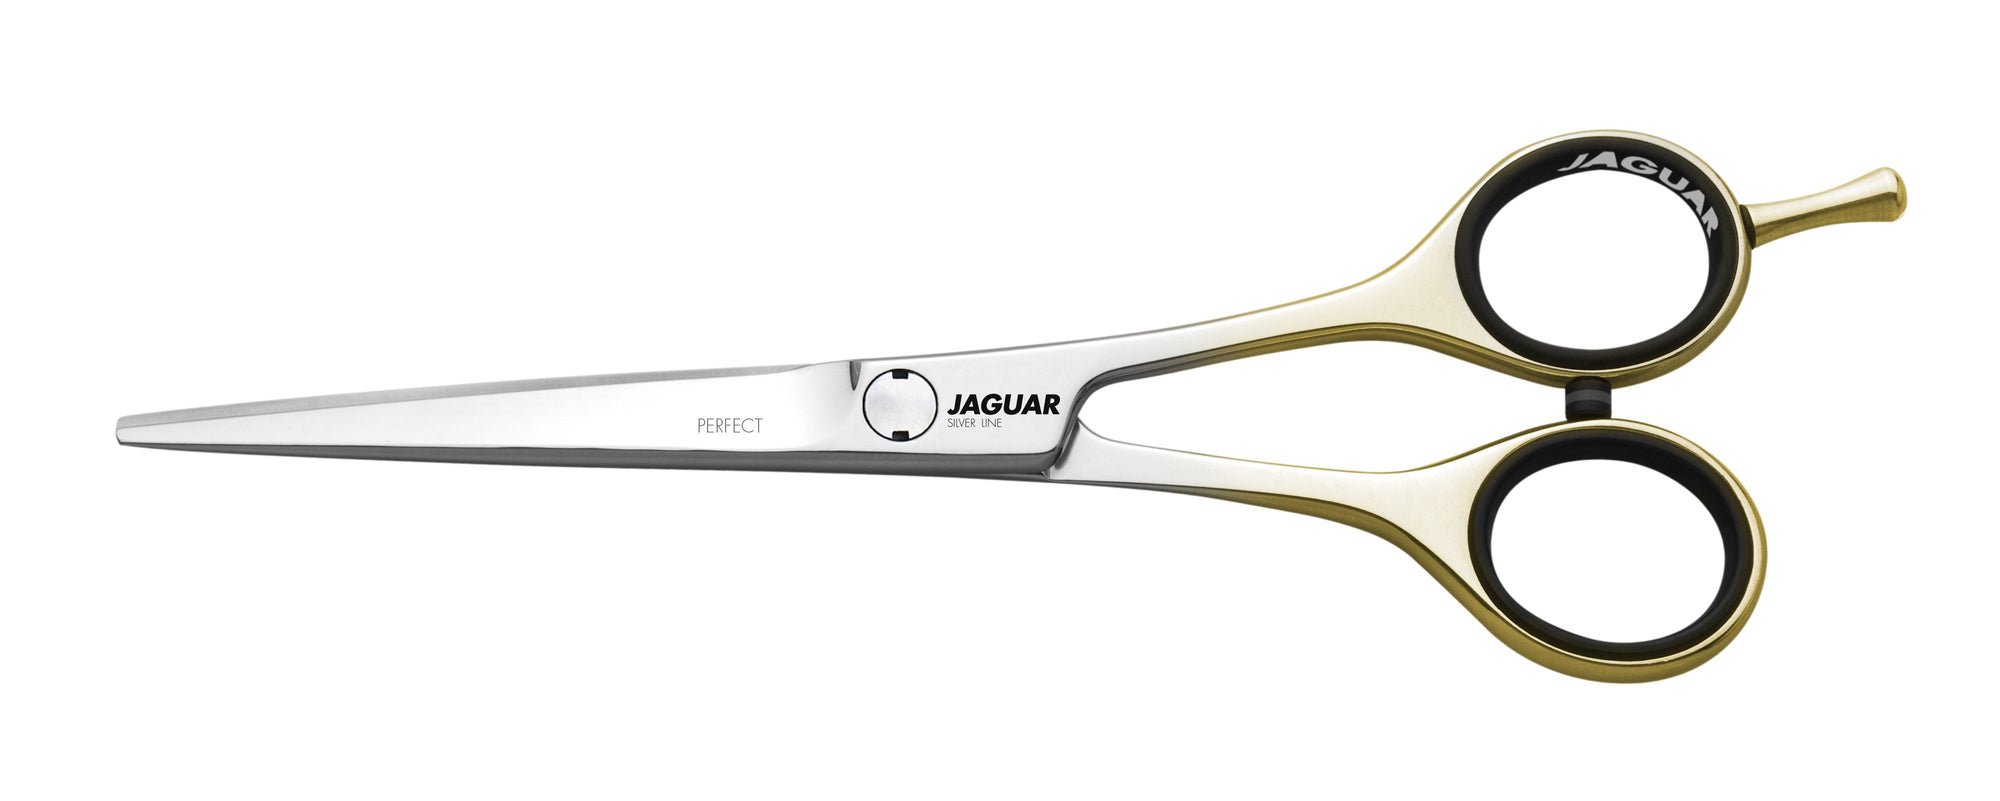 Jaguar Perfect (1563004239955)